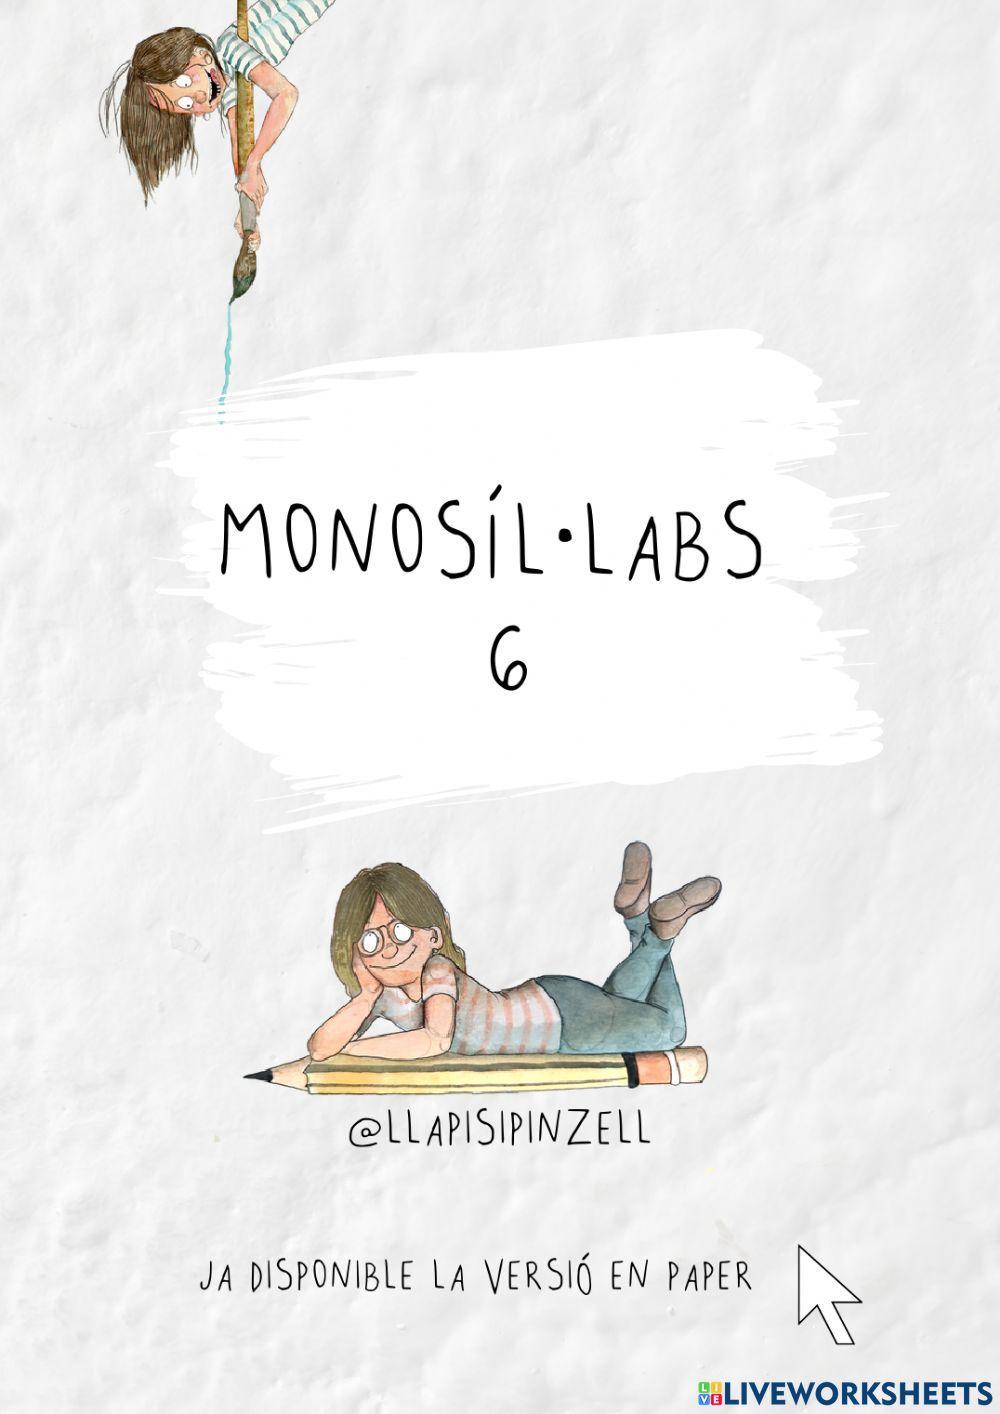 monosíl·labs 6